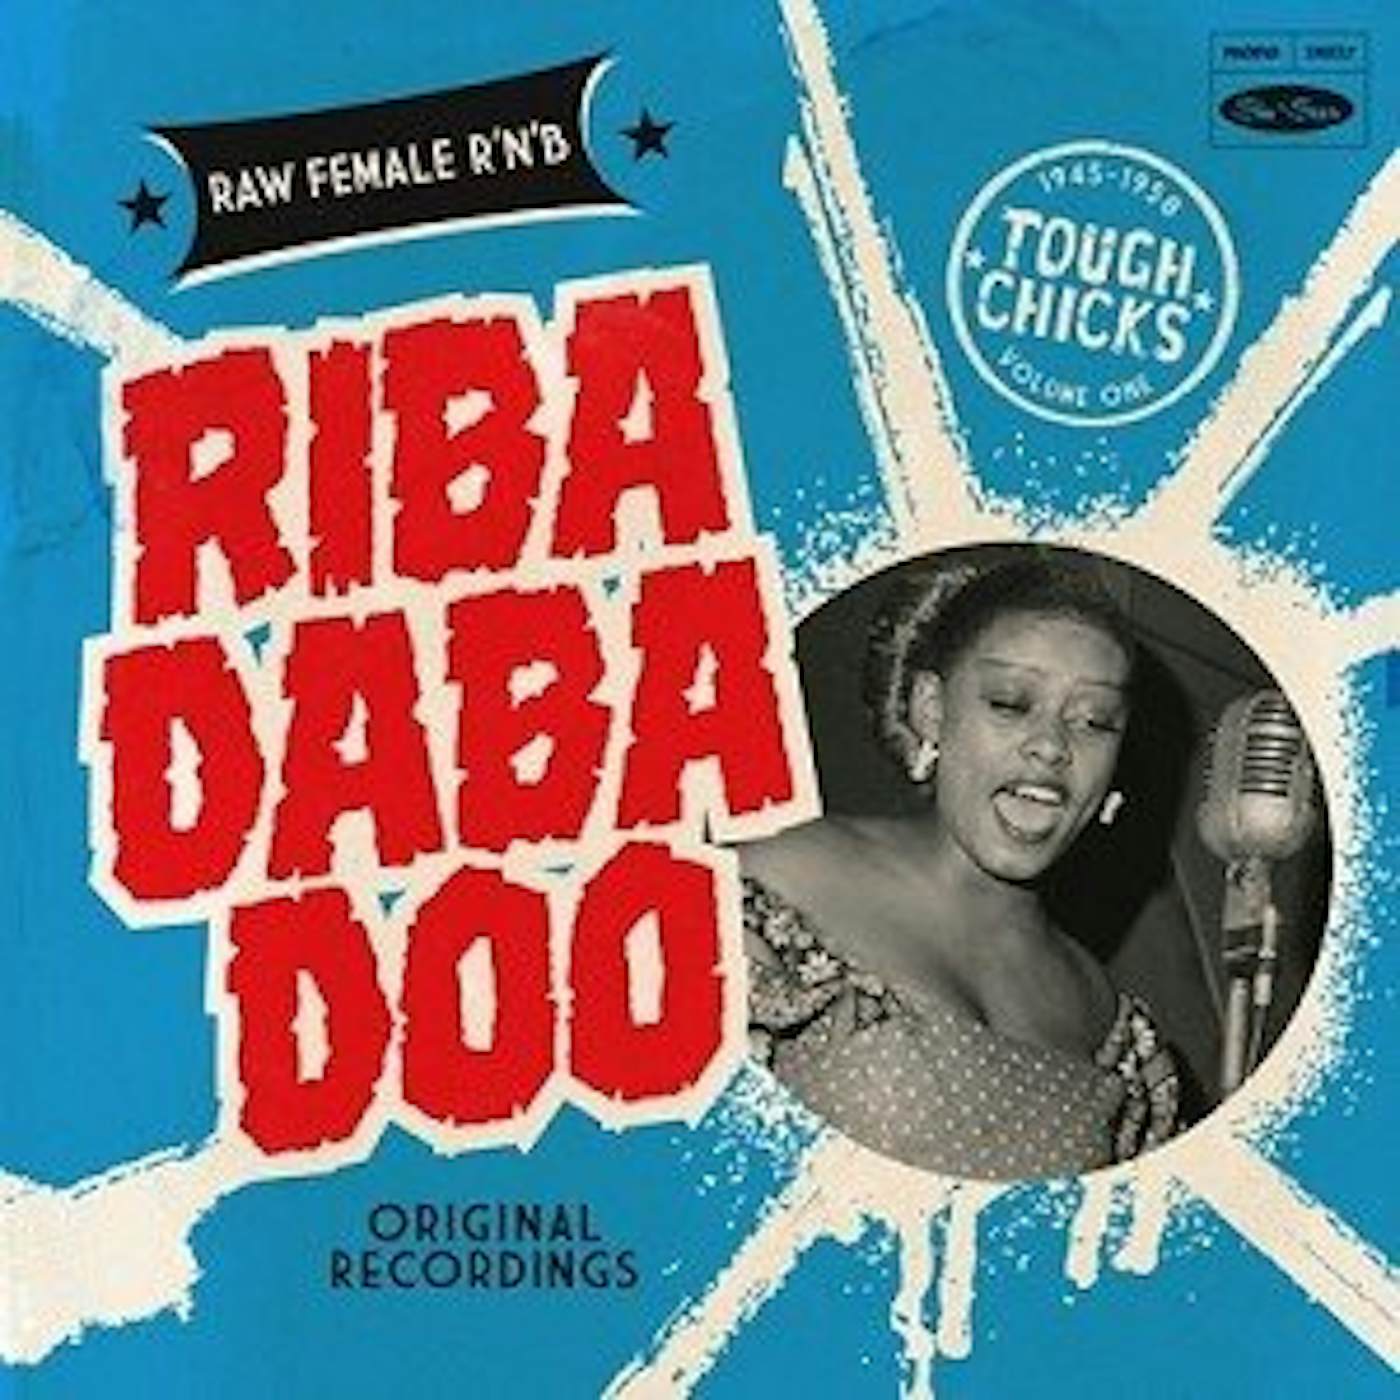 RIBA DABA DOO TOUGH CHICKS 1: WILD & RAW FEMALE Vinyl Record